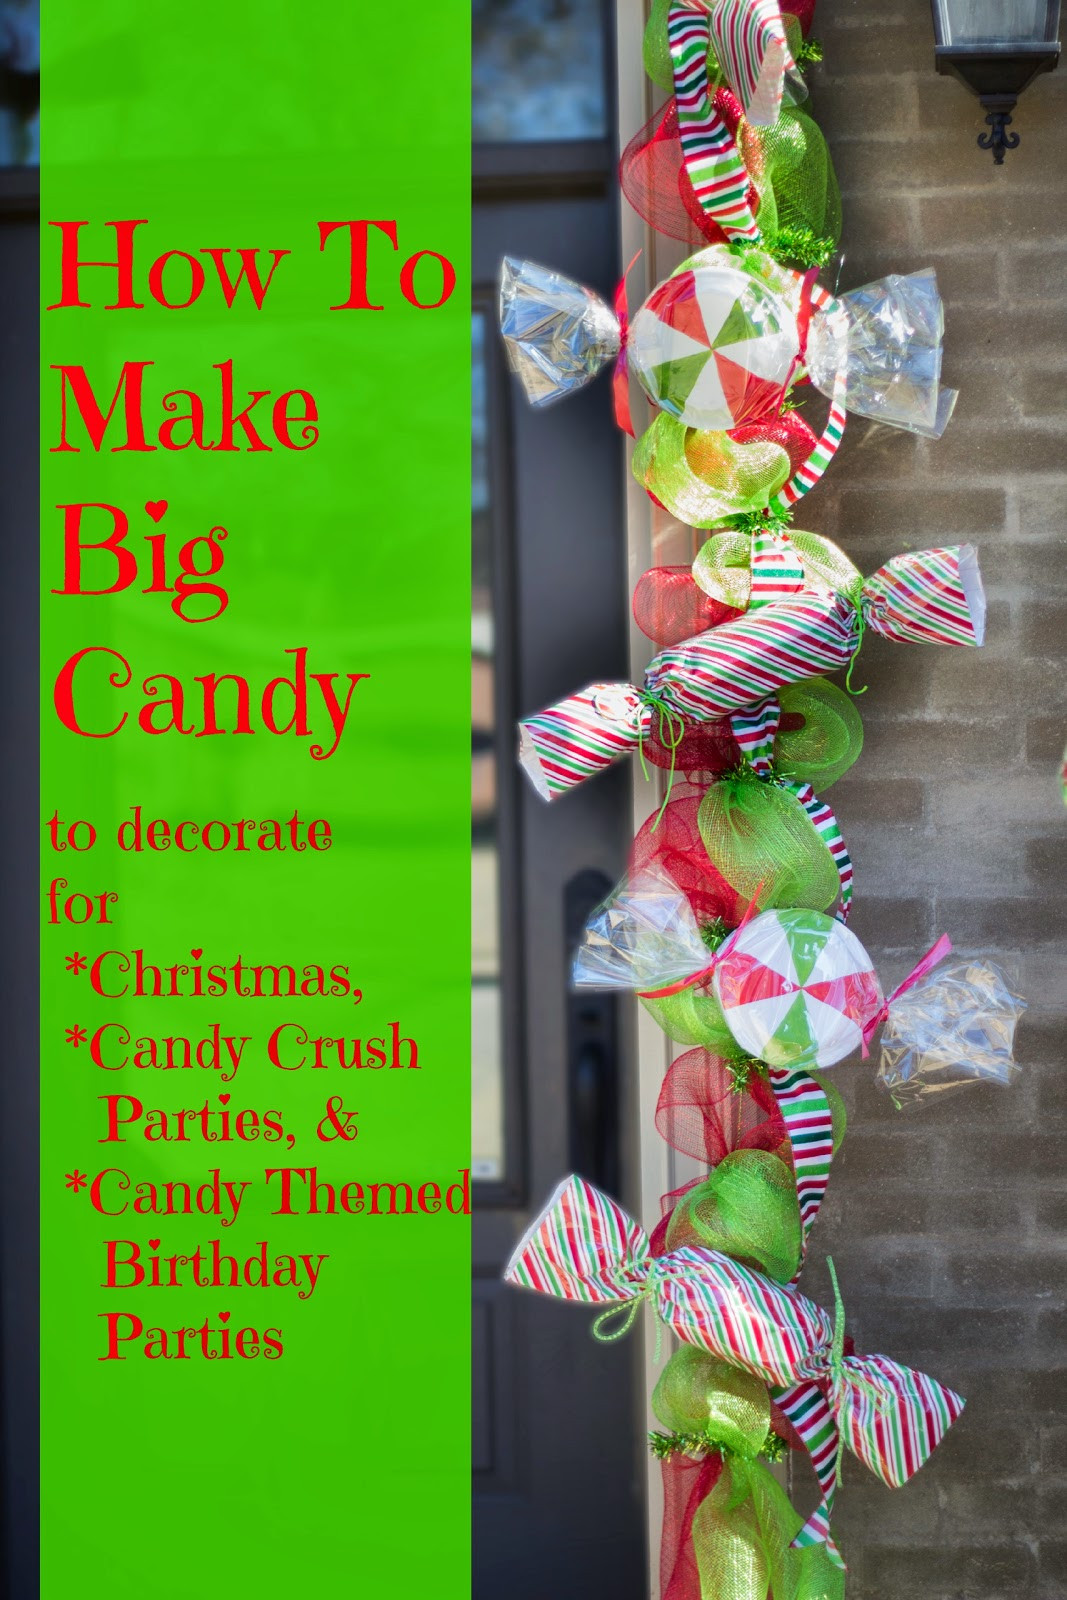 Make Christmas Candy
 Make Big Candy Decorations